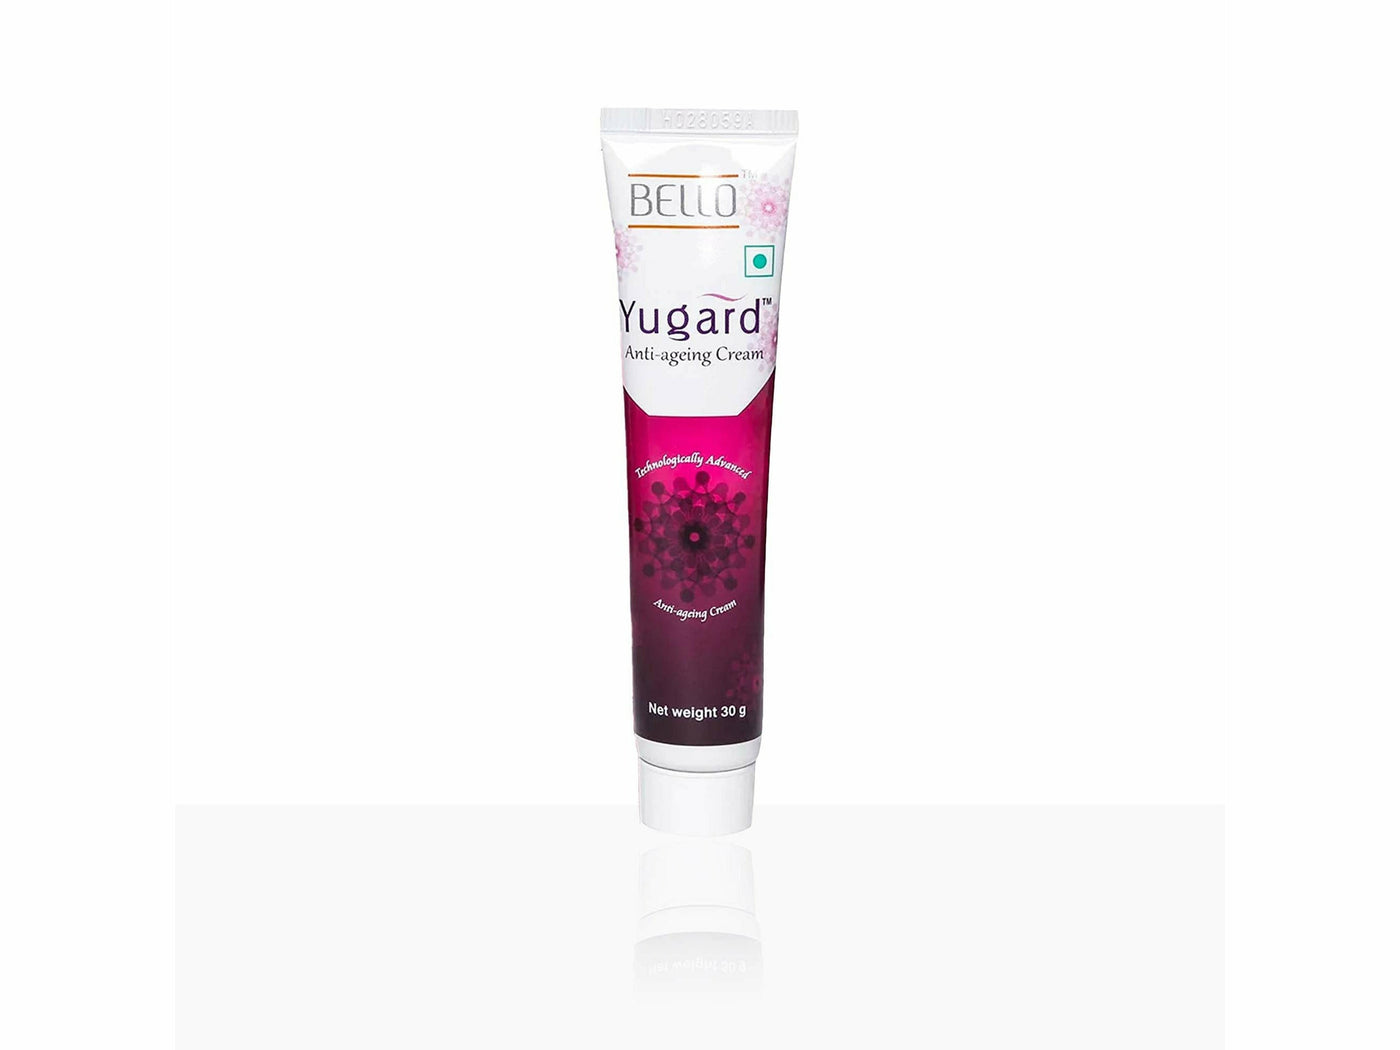 Bello Yugard Anti-Ageing Cream